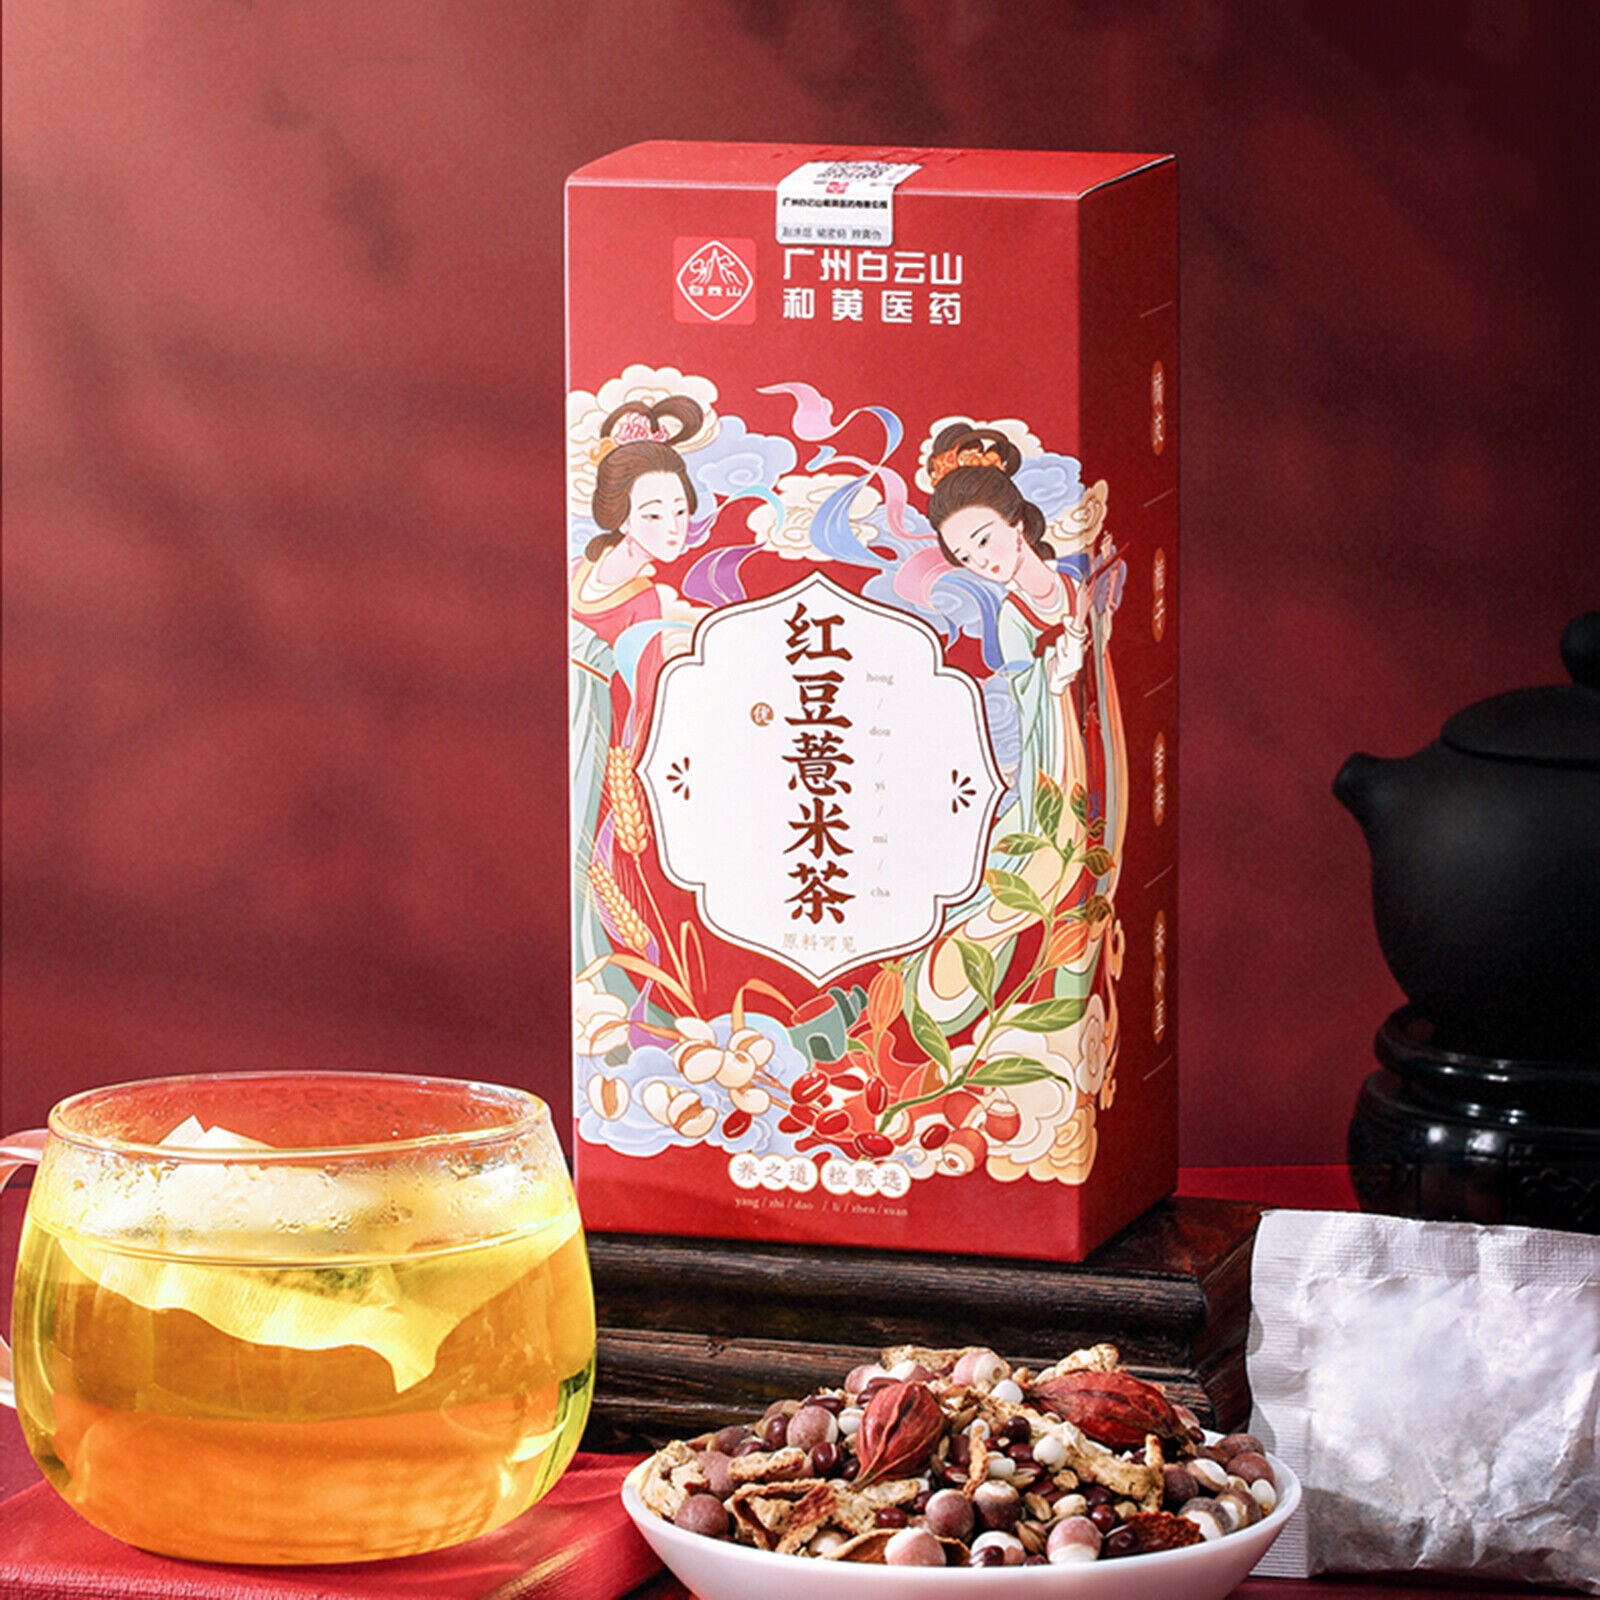 Dehumidifying Hongdou Yimi Damai Cha Red Beans Pearl Barley Tea Herbal Tea 150g